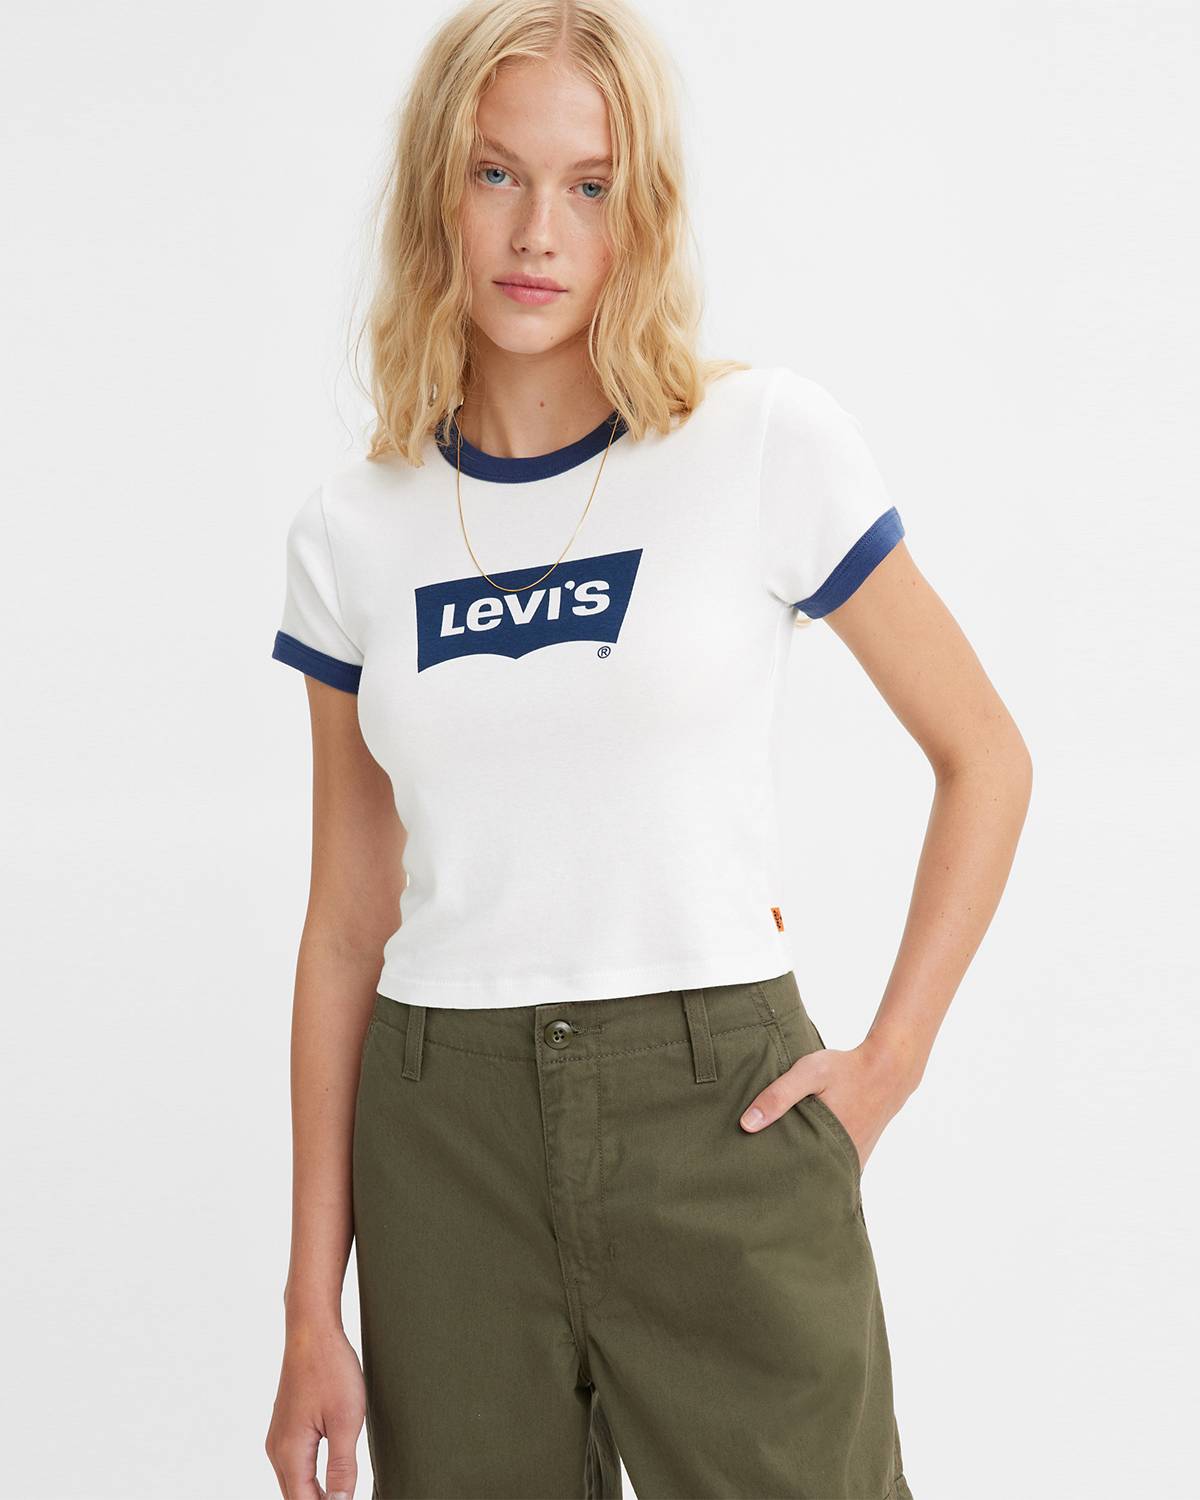 Women's Short Sleeve Shirts, Blouses & Tops